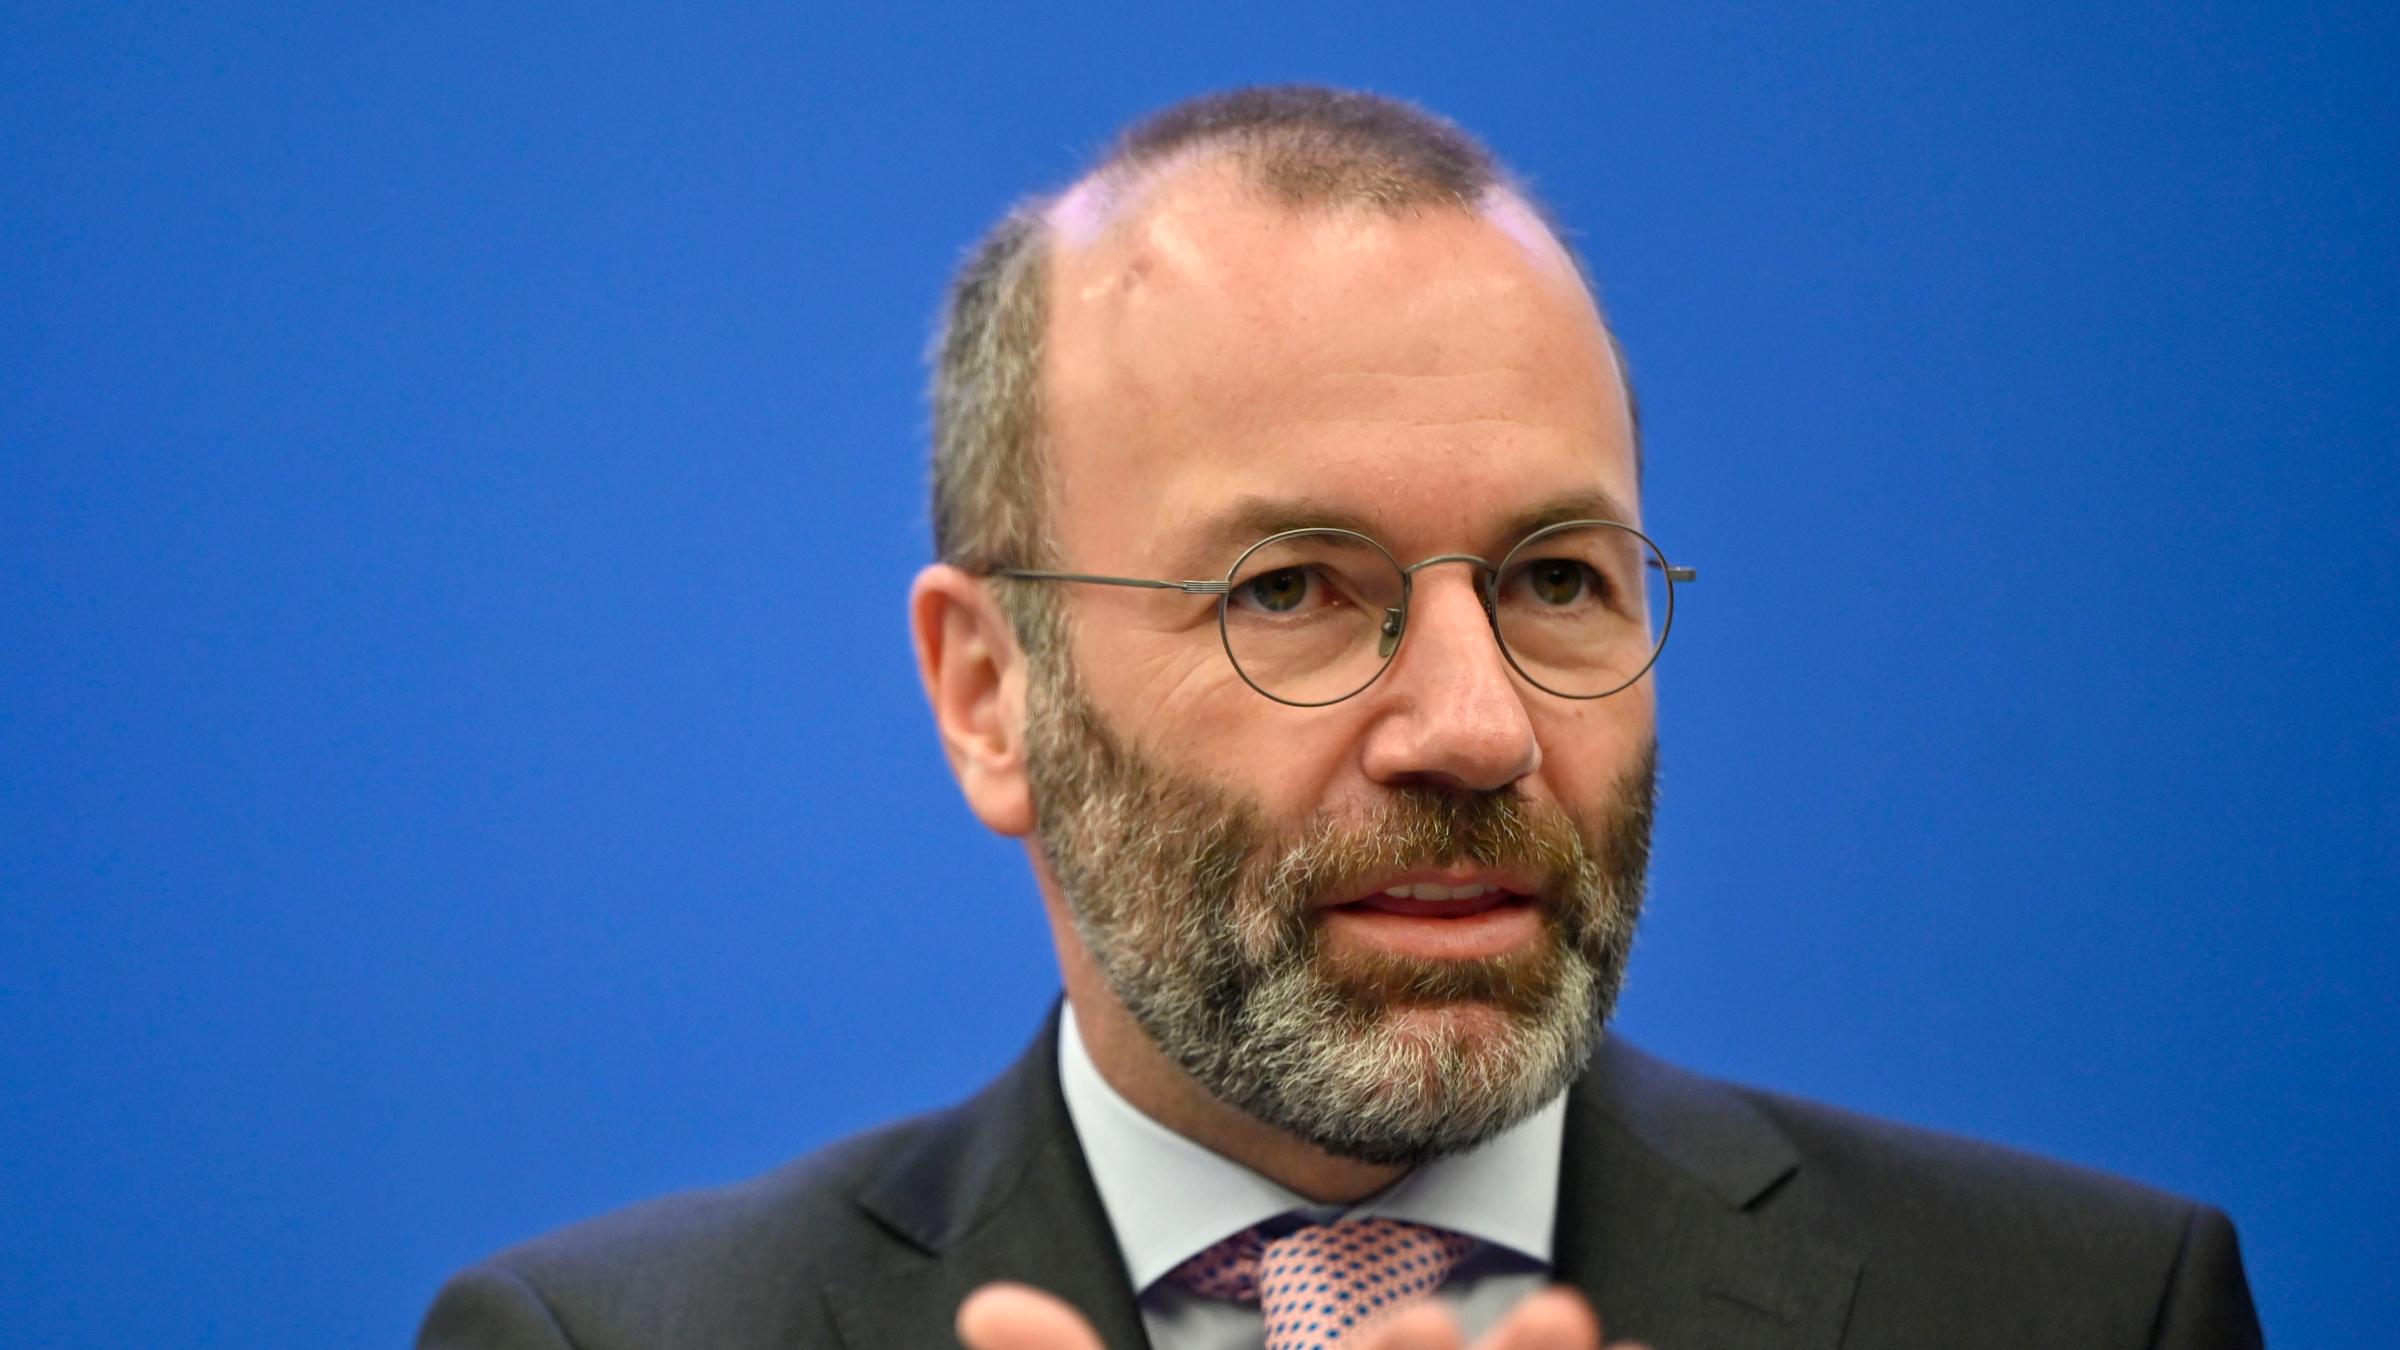 Manfred Weber, Chef der EVP-Fraktion im EU-Parlament, im Februar 2022 v...</p>

                        <a href=